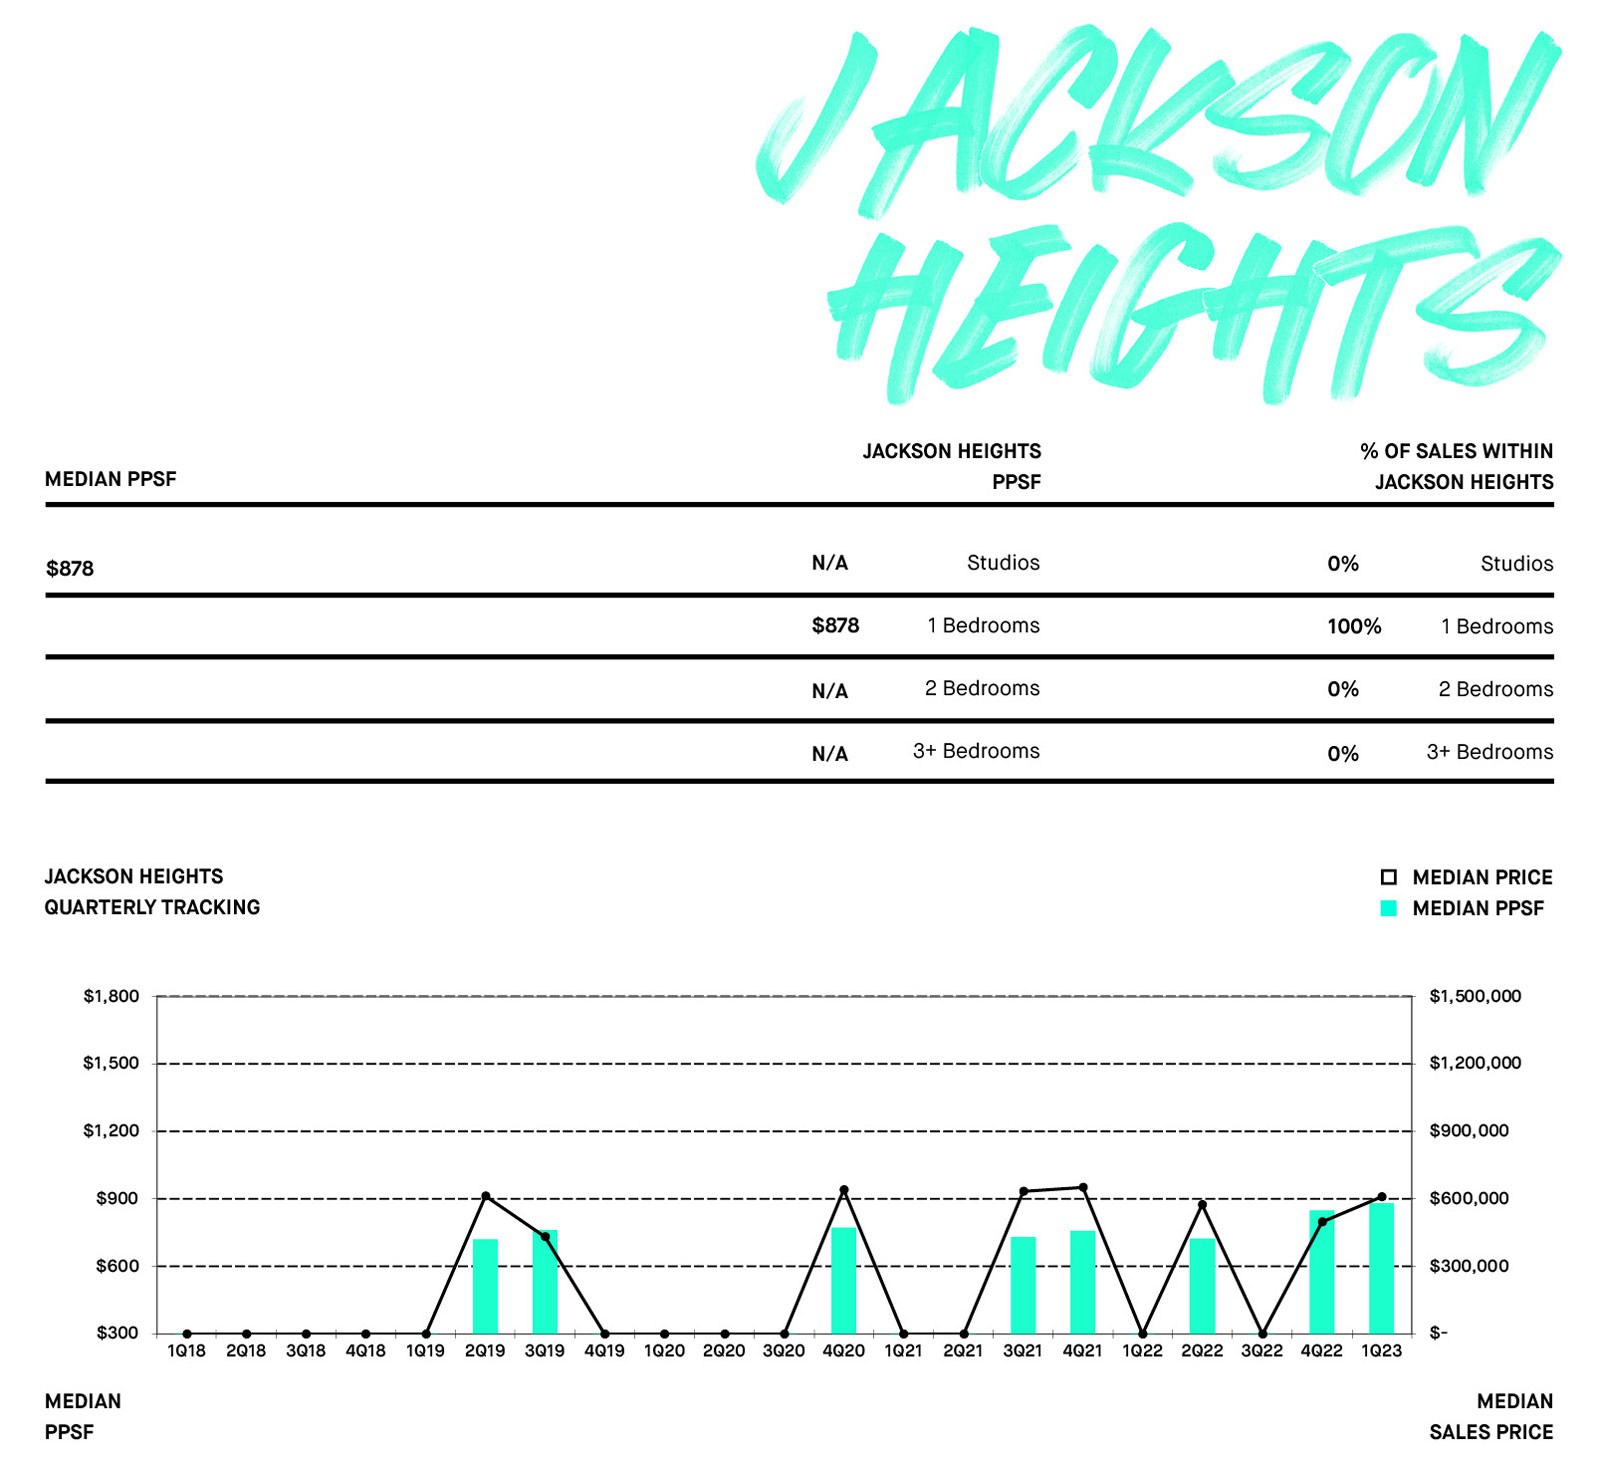 JACKSON HEIGHTS